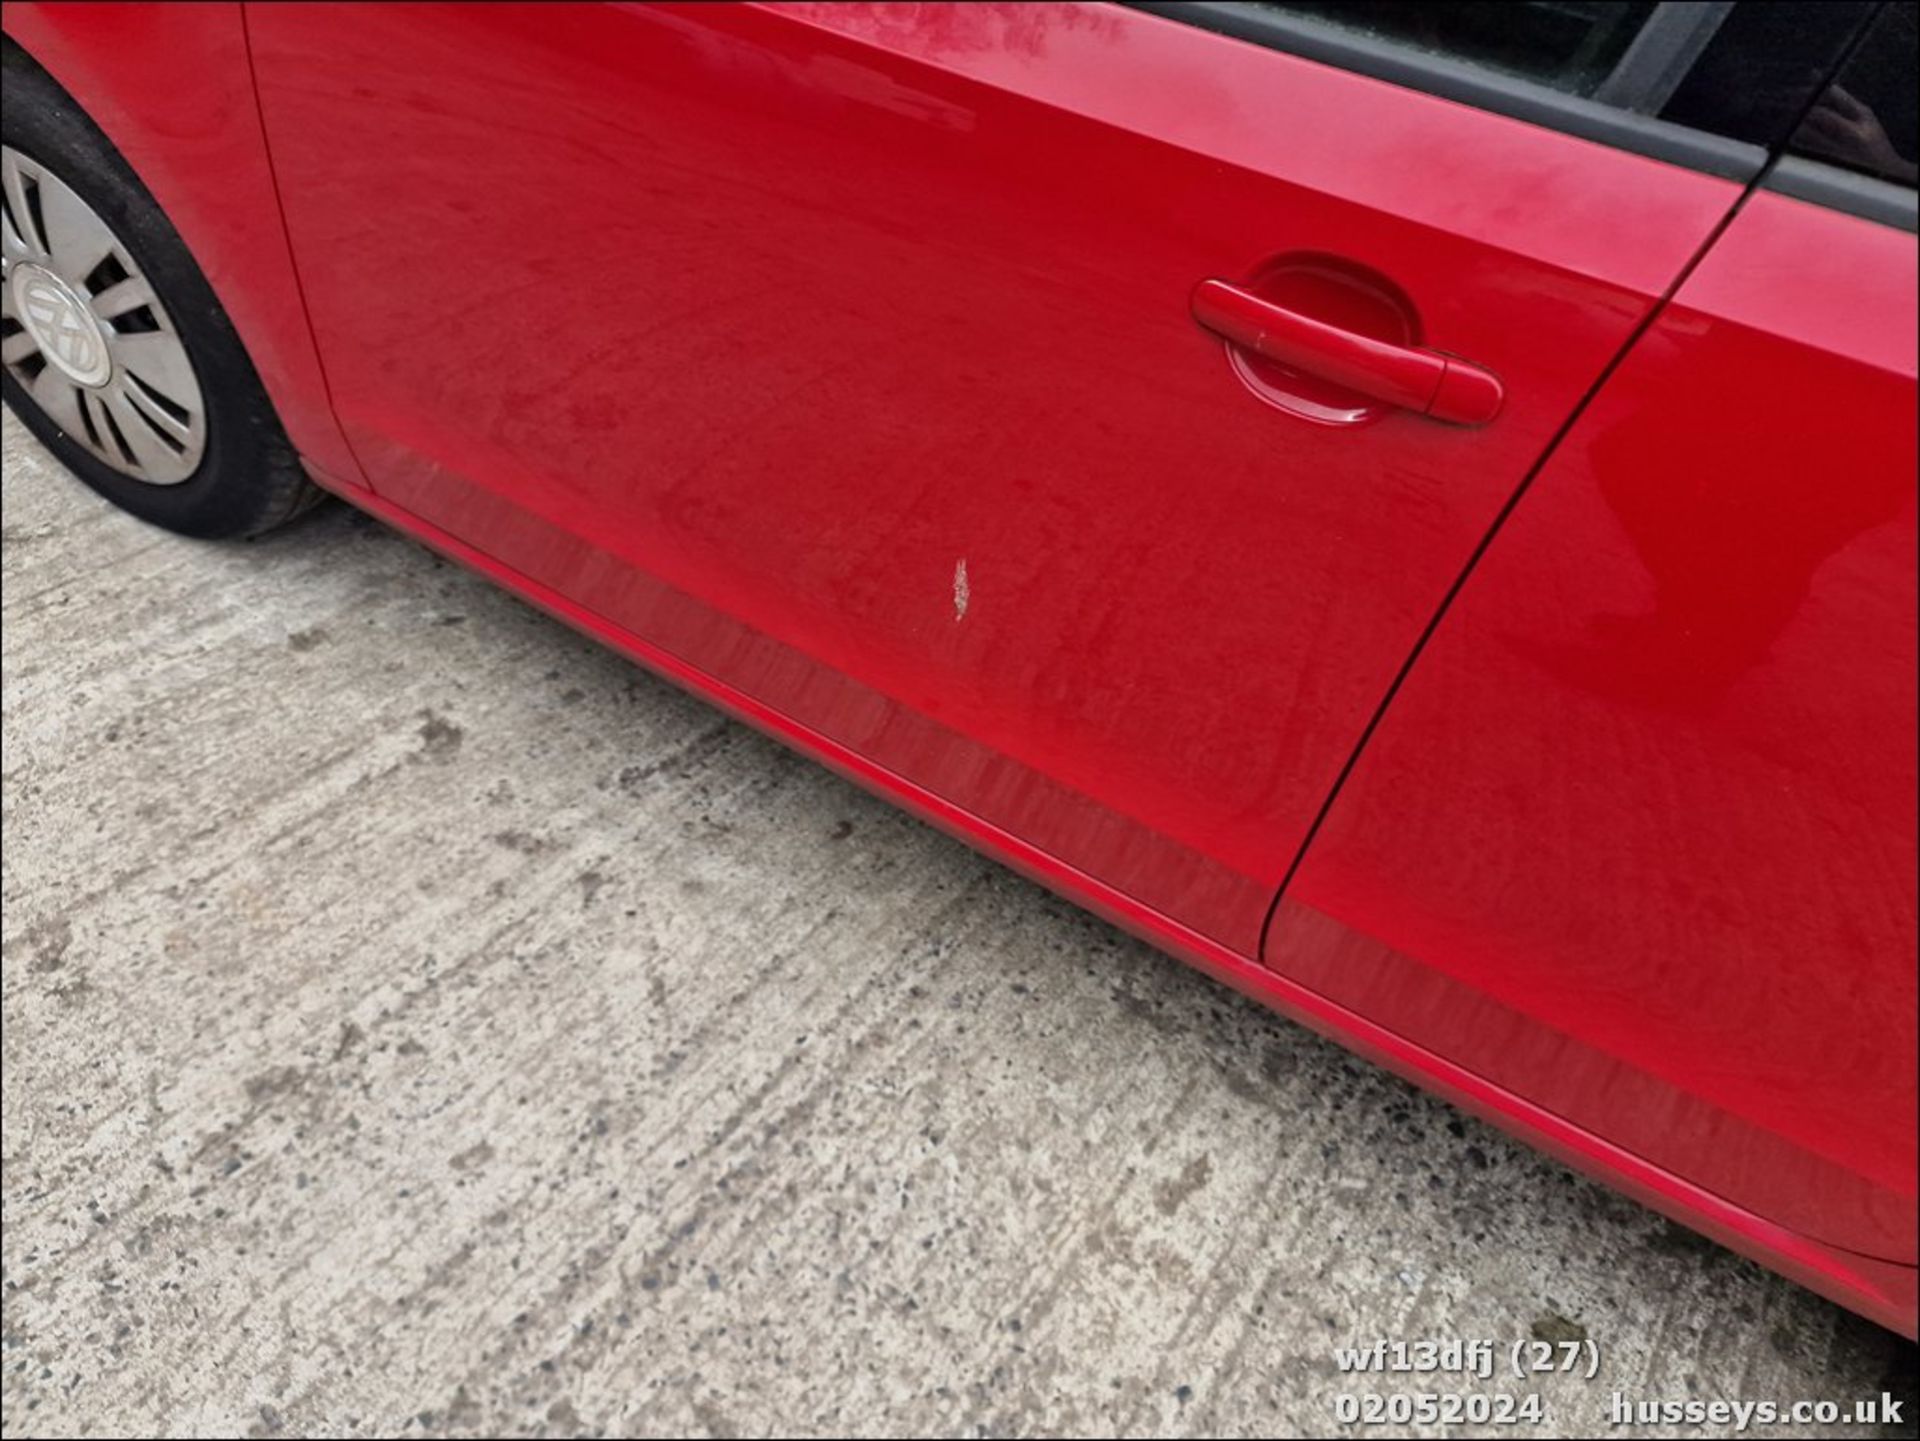 13/13 VOLKSWAGEN MOVE UP AUTO - 999cc 5dr Hatchback (Red, 17k) - Image 28 of 46